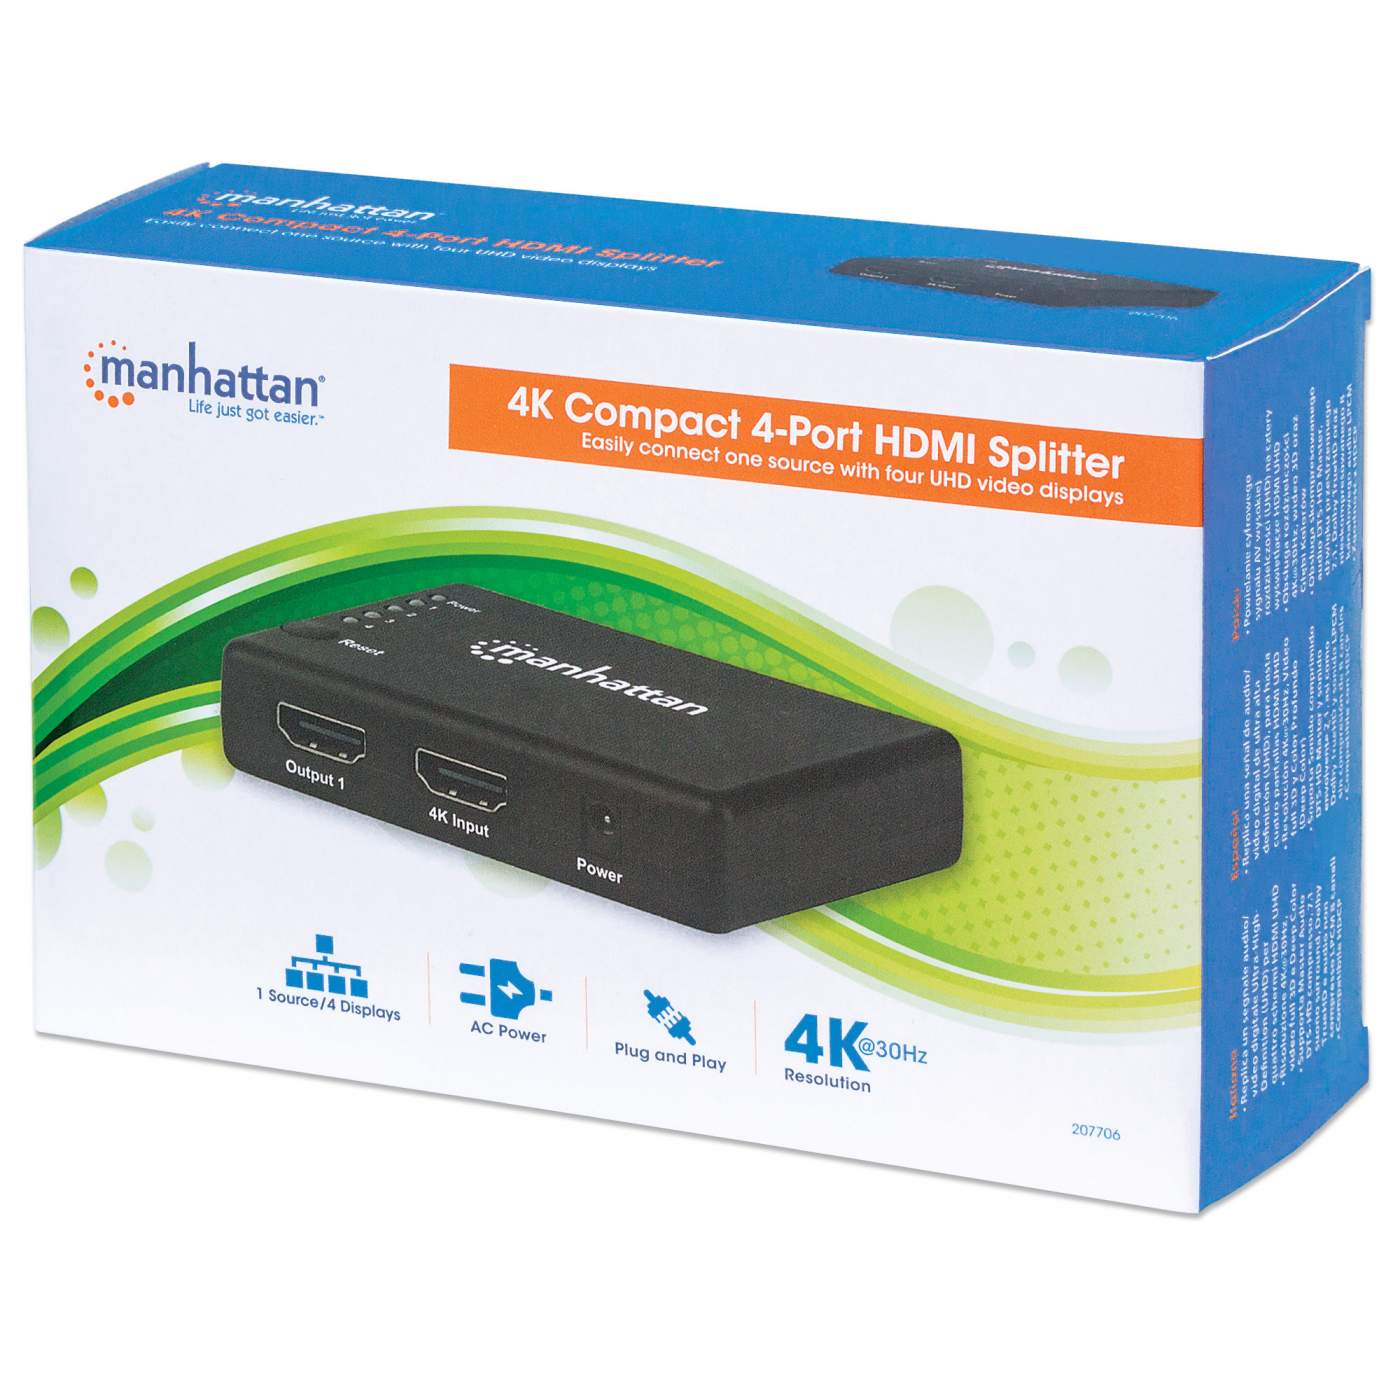 4K Compact 4-Port HDMI Splitter Packaging Image 2